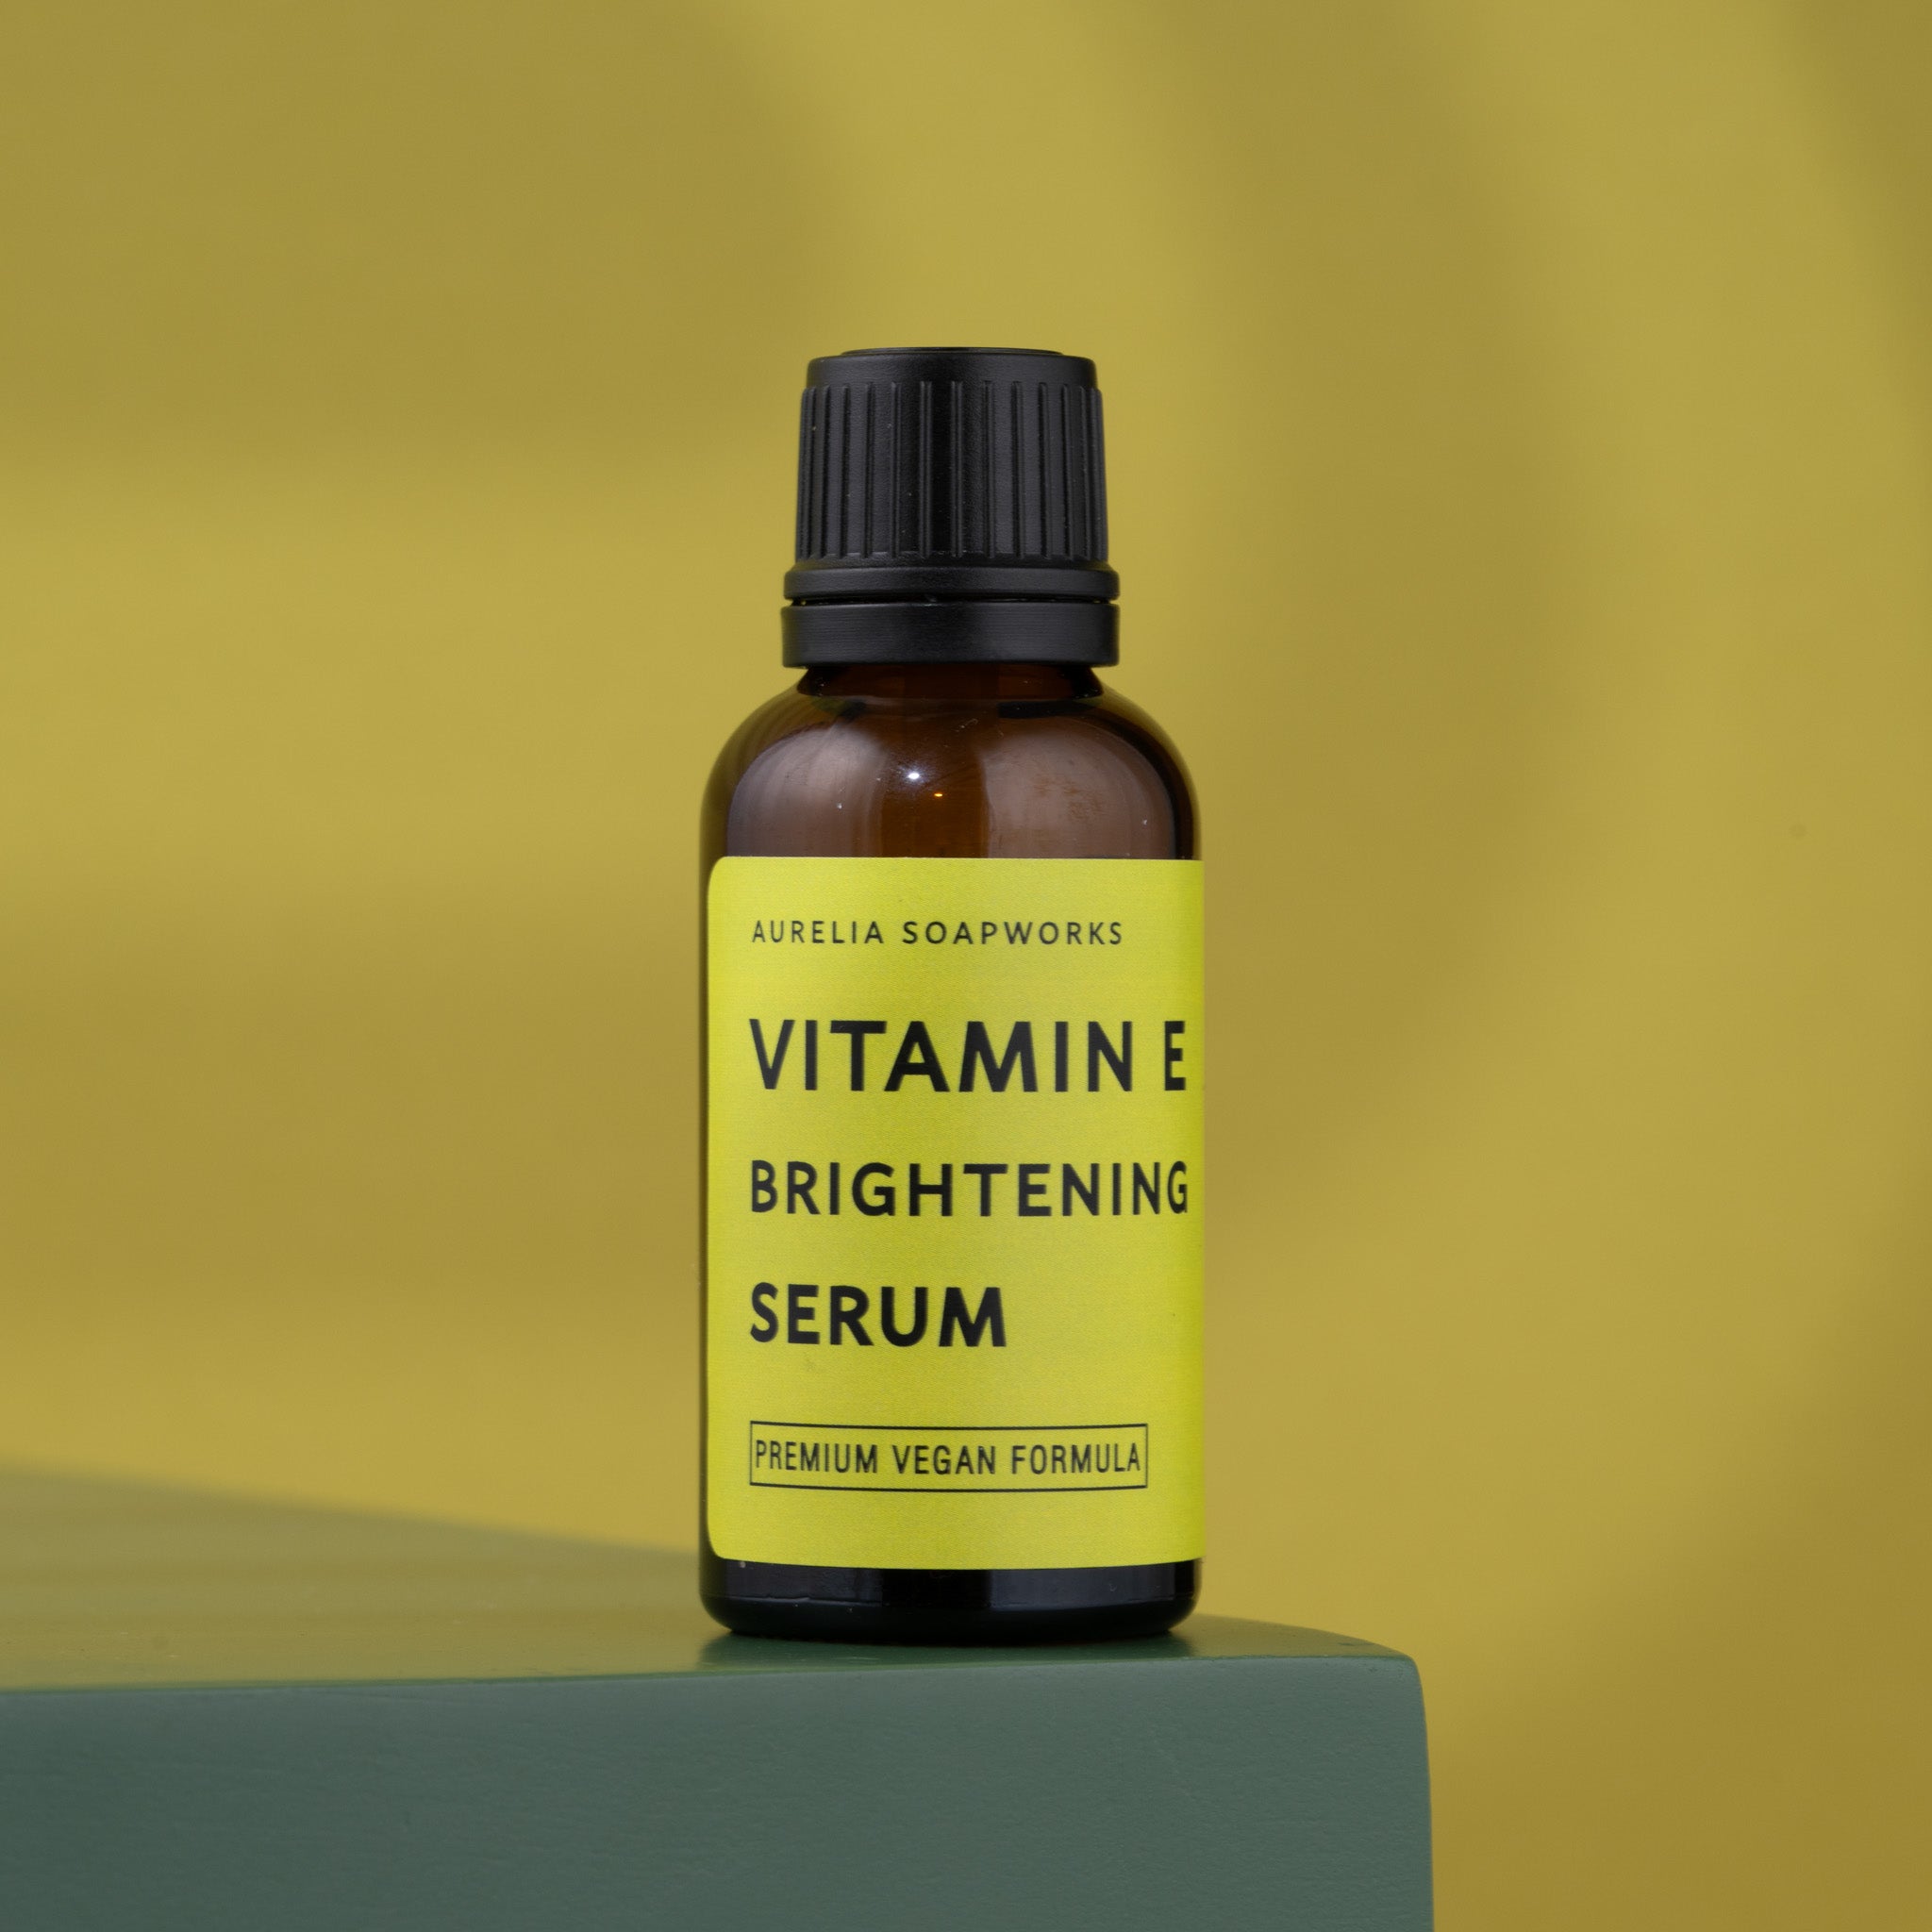 Vitamin E brightening face serum